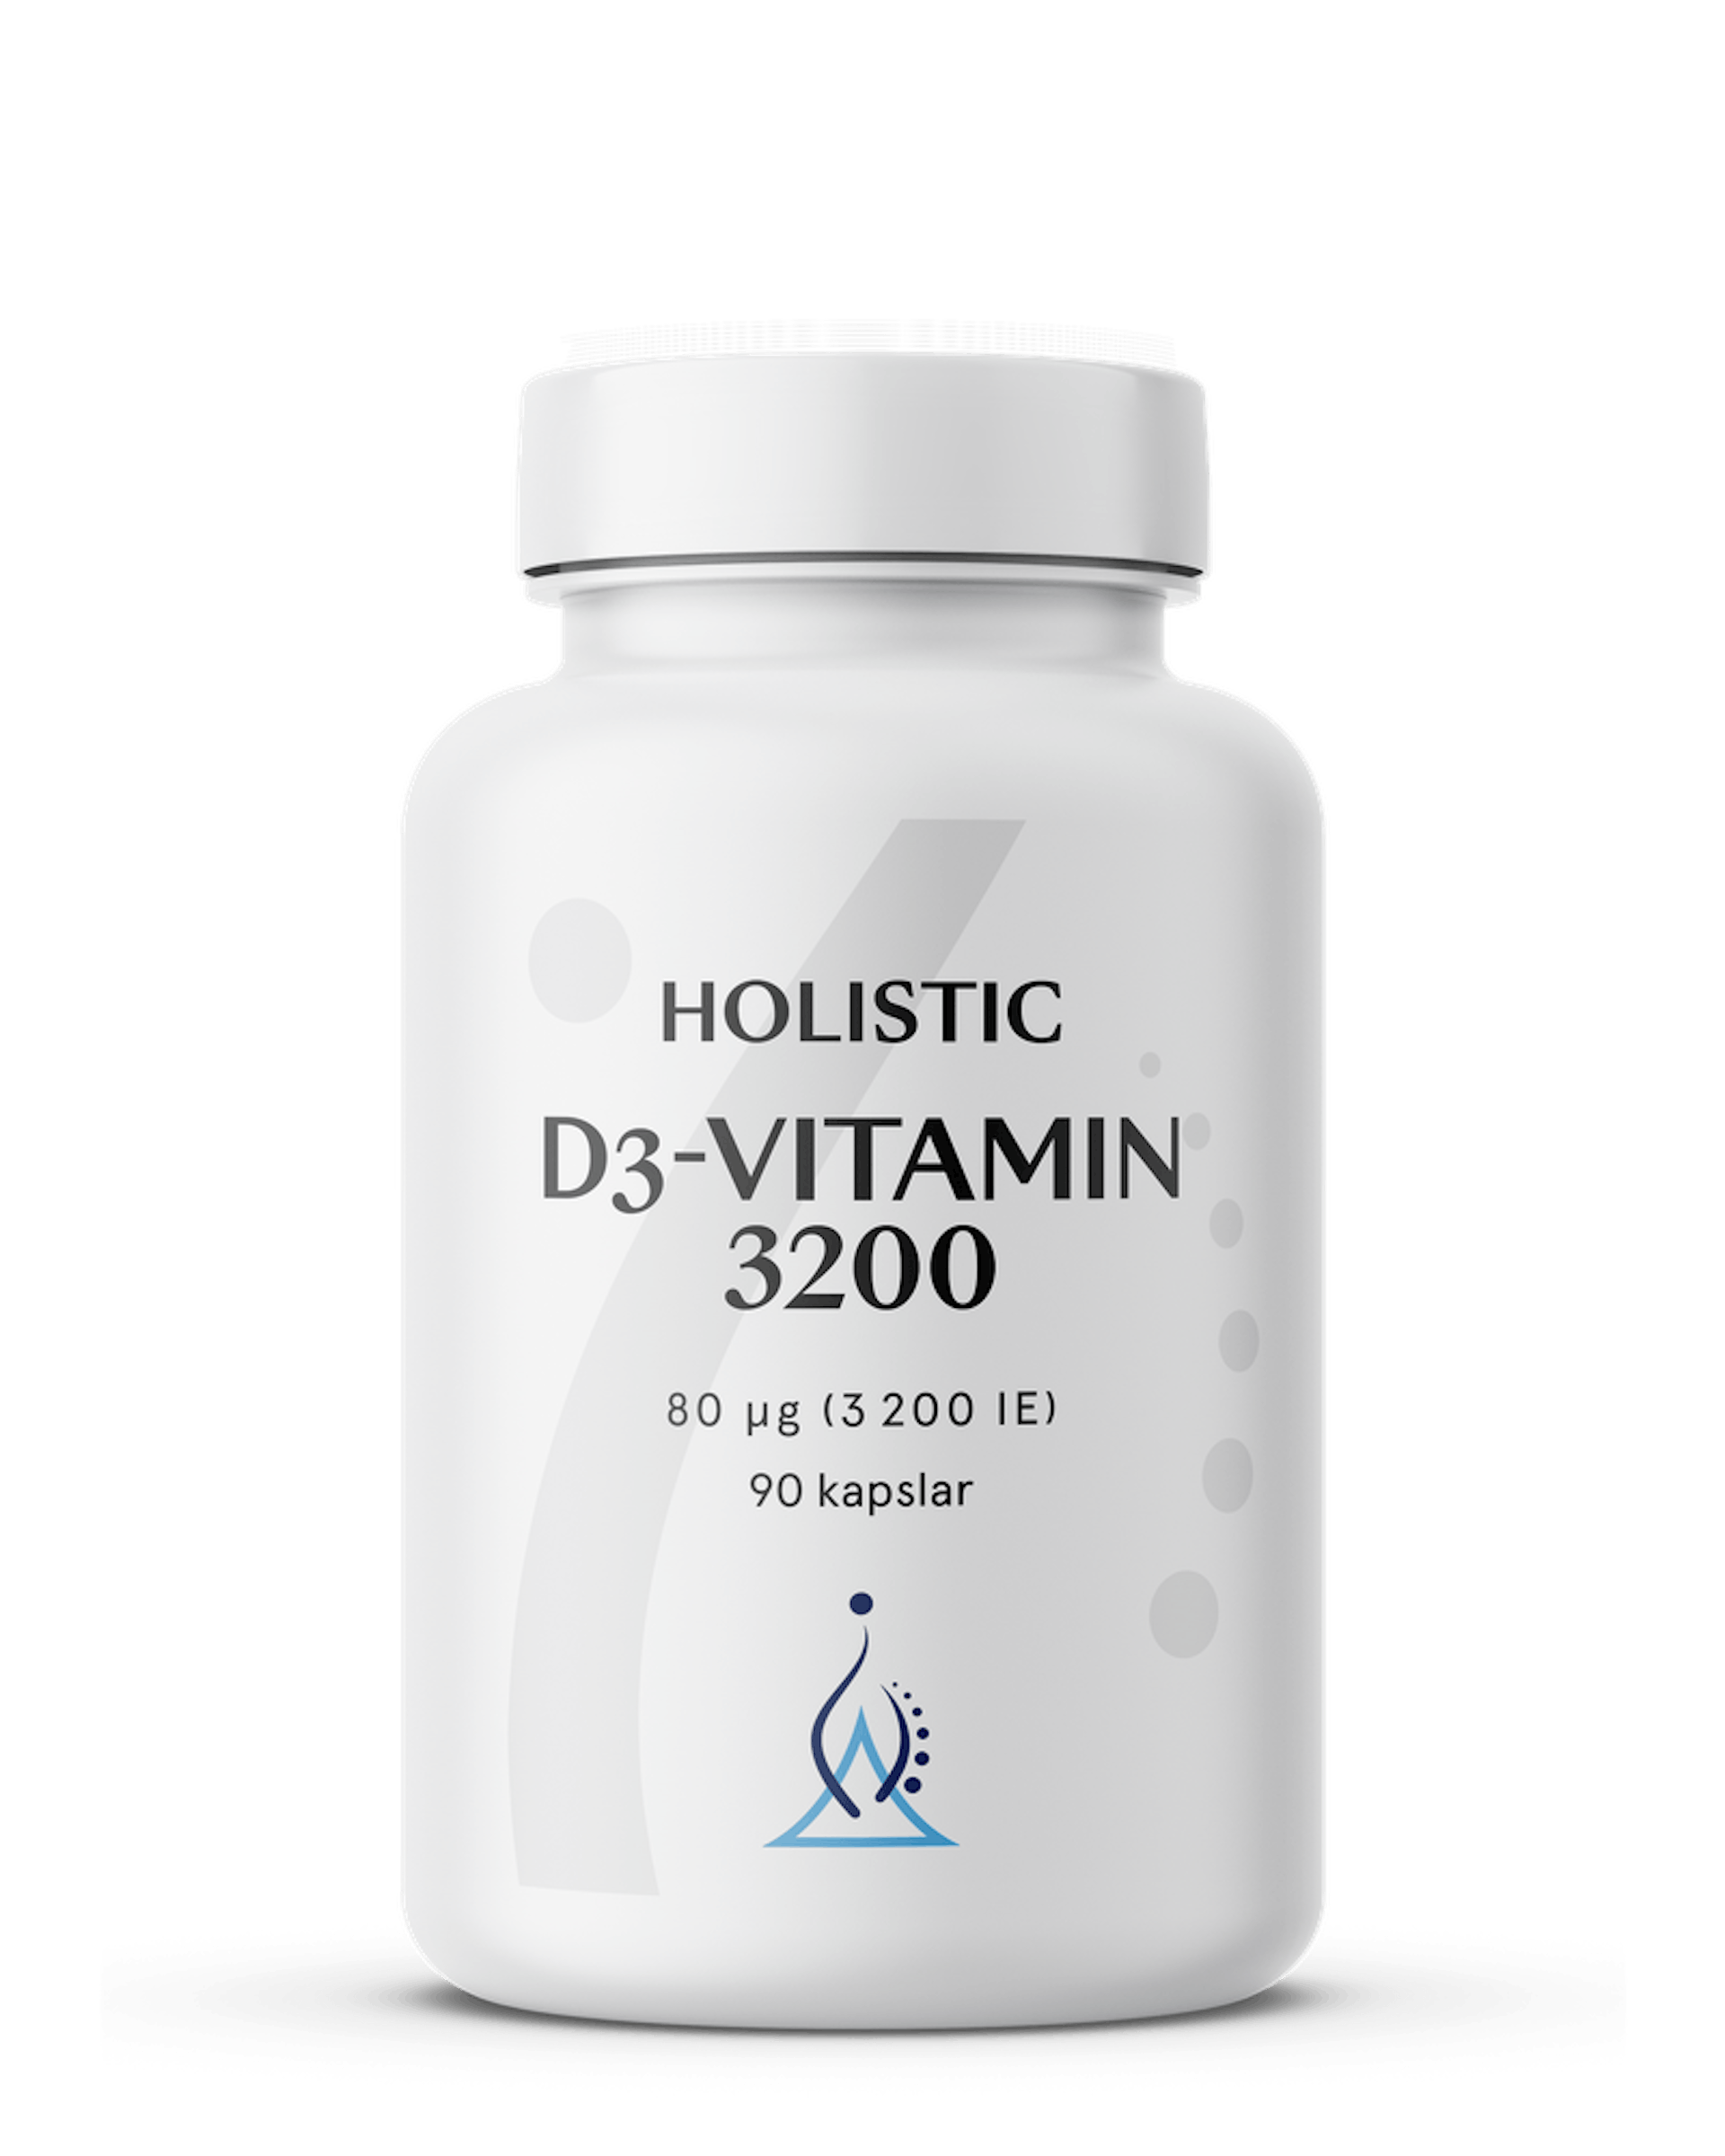 D3-vitamin 3200, 90 kapslar (1 av 1)